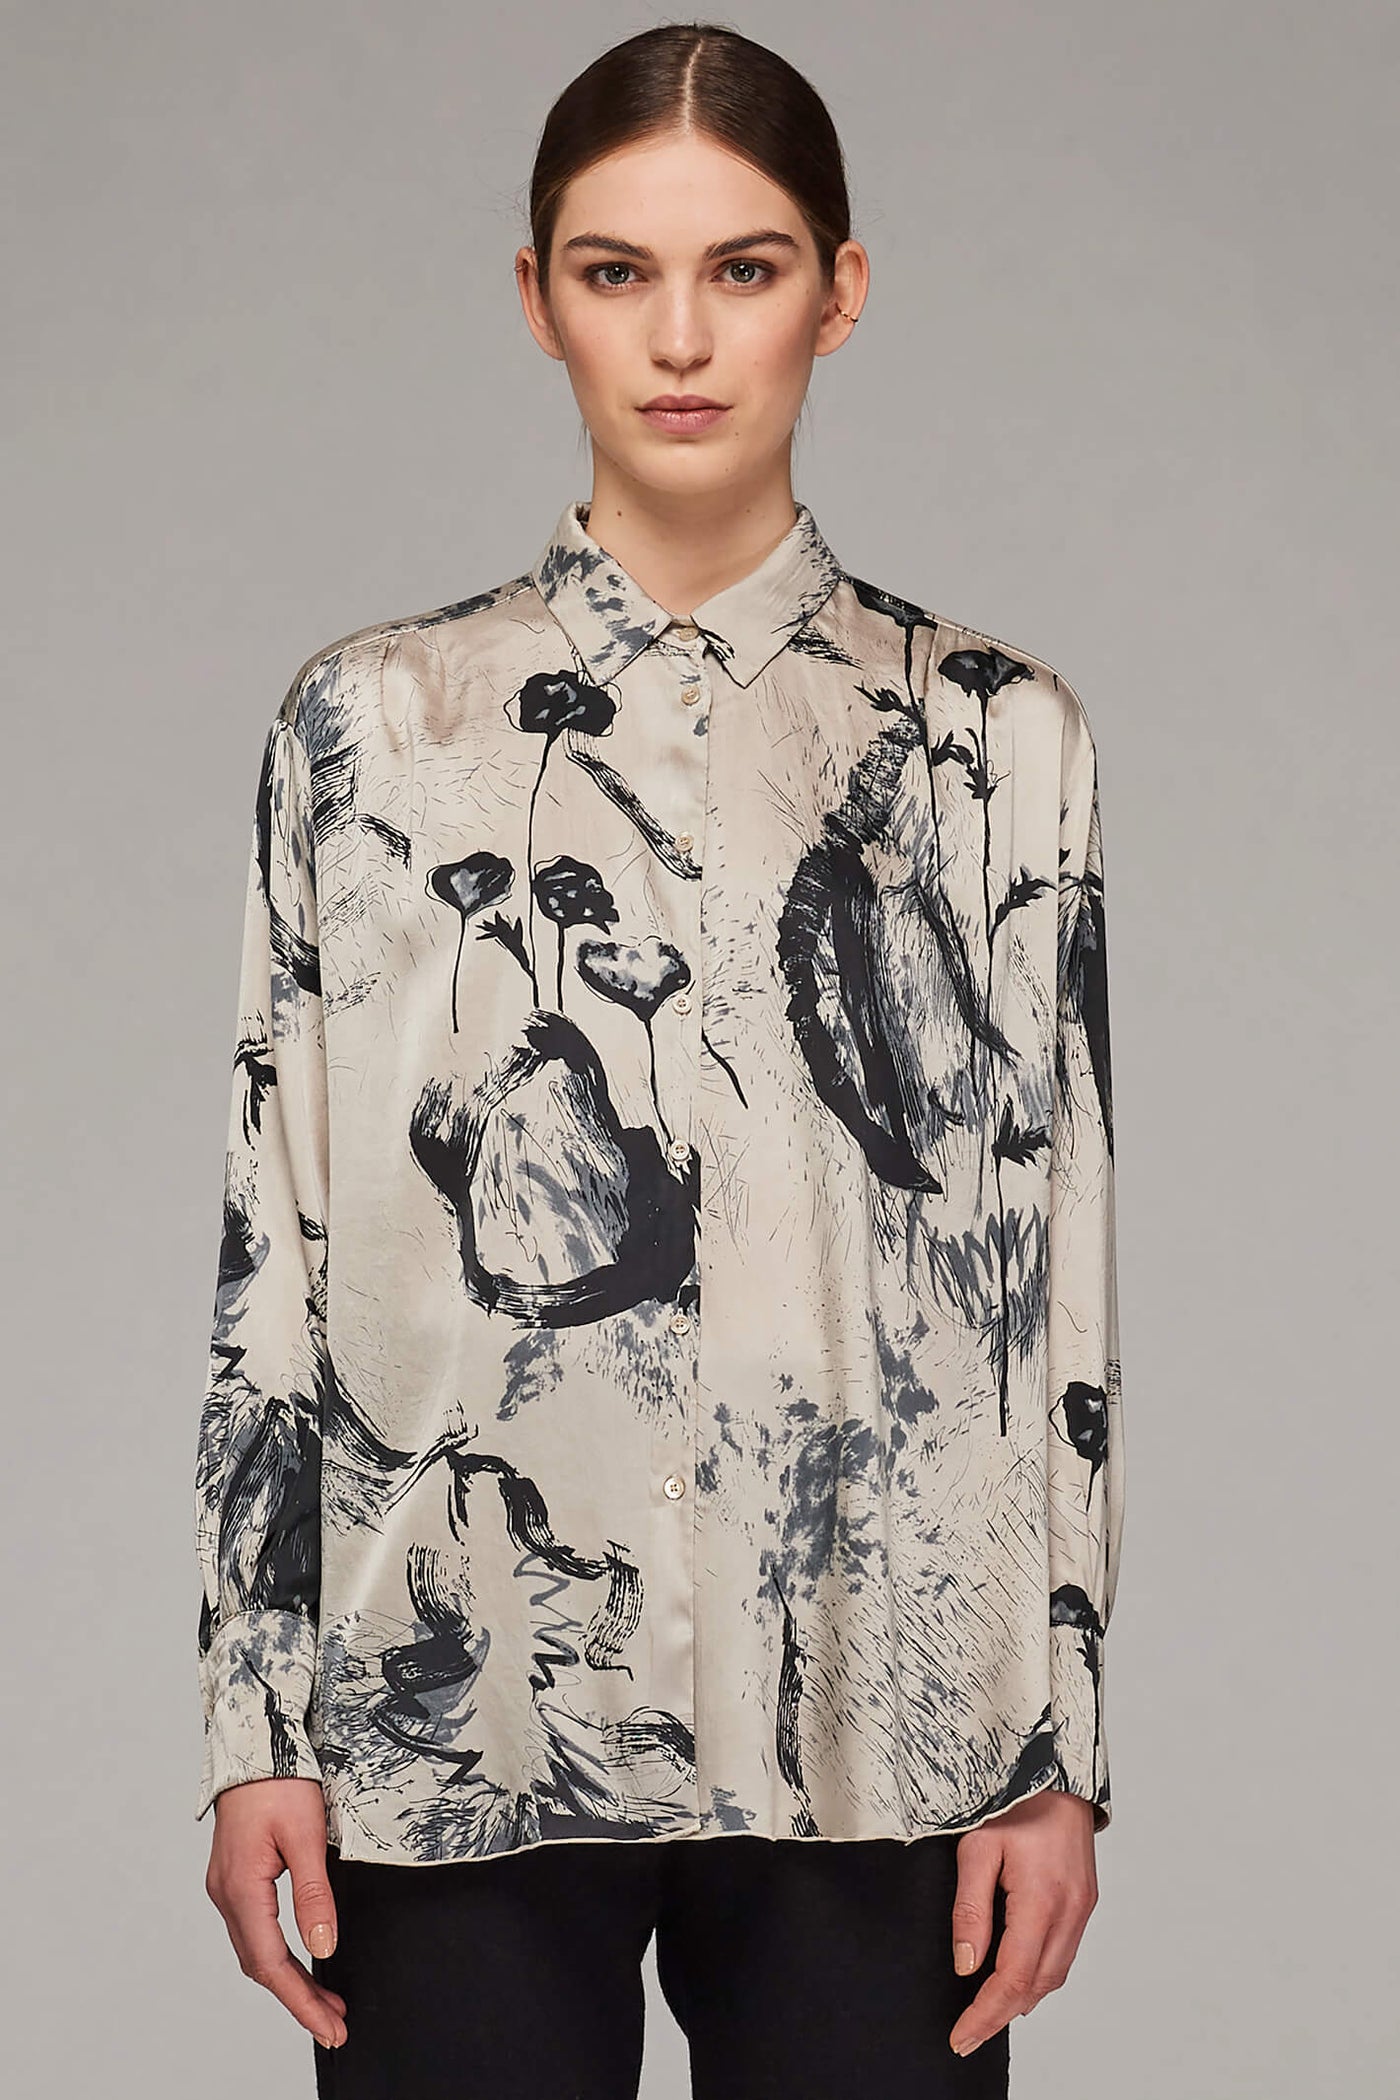 Tandem CFDTDS-5201 Sand Print Shirt - Lonah Boutique